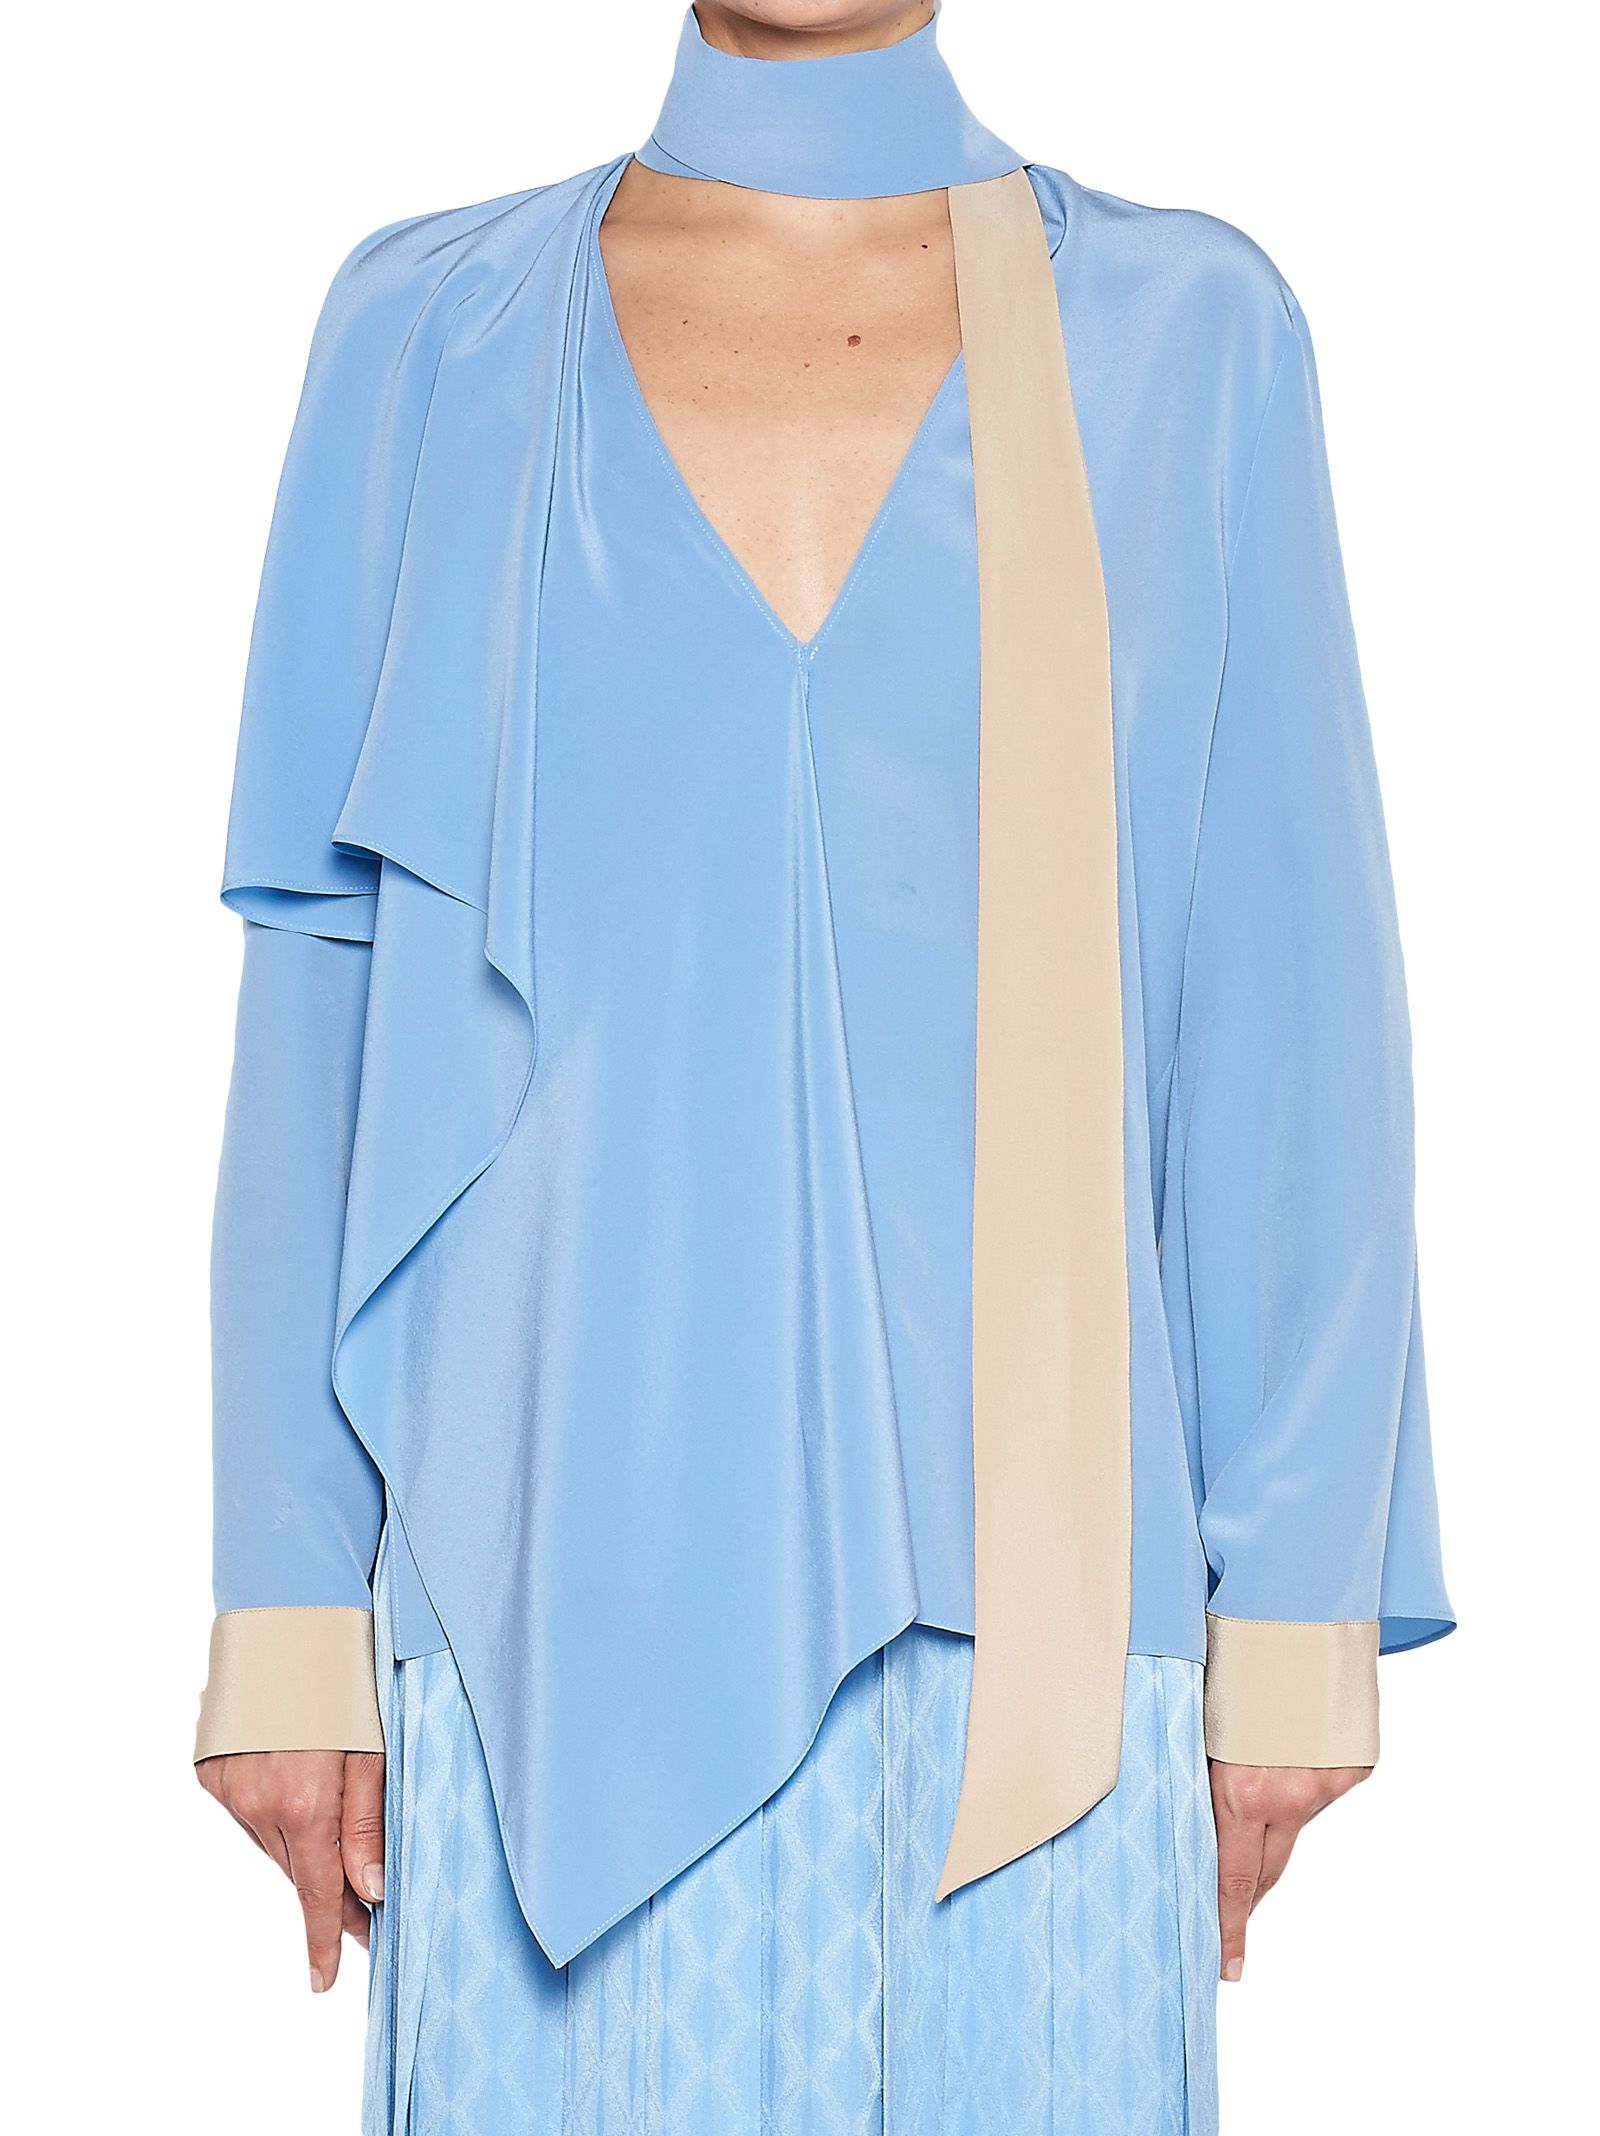 Fendi - Fendi Blouse - Light blue, Women's Shirts | Italist